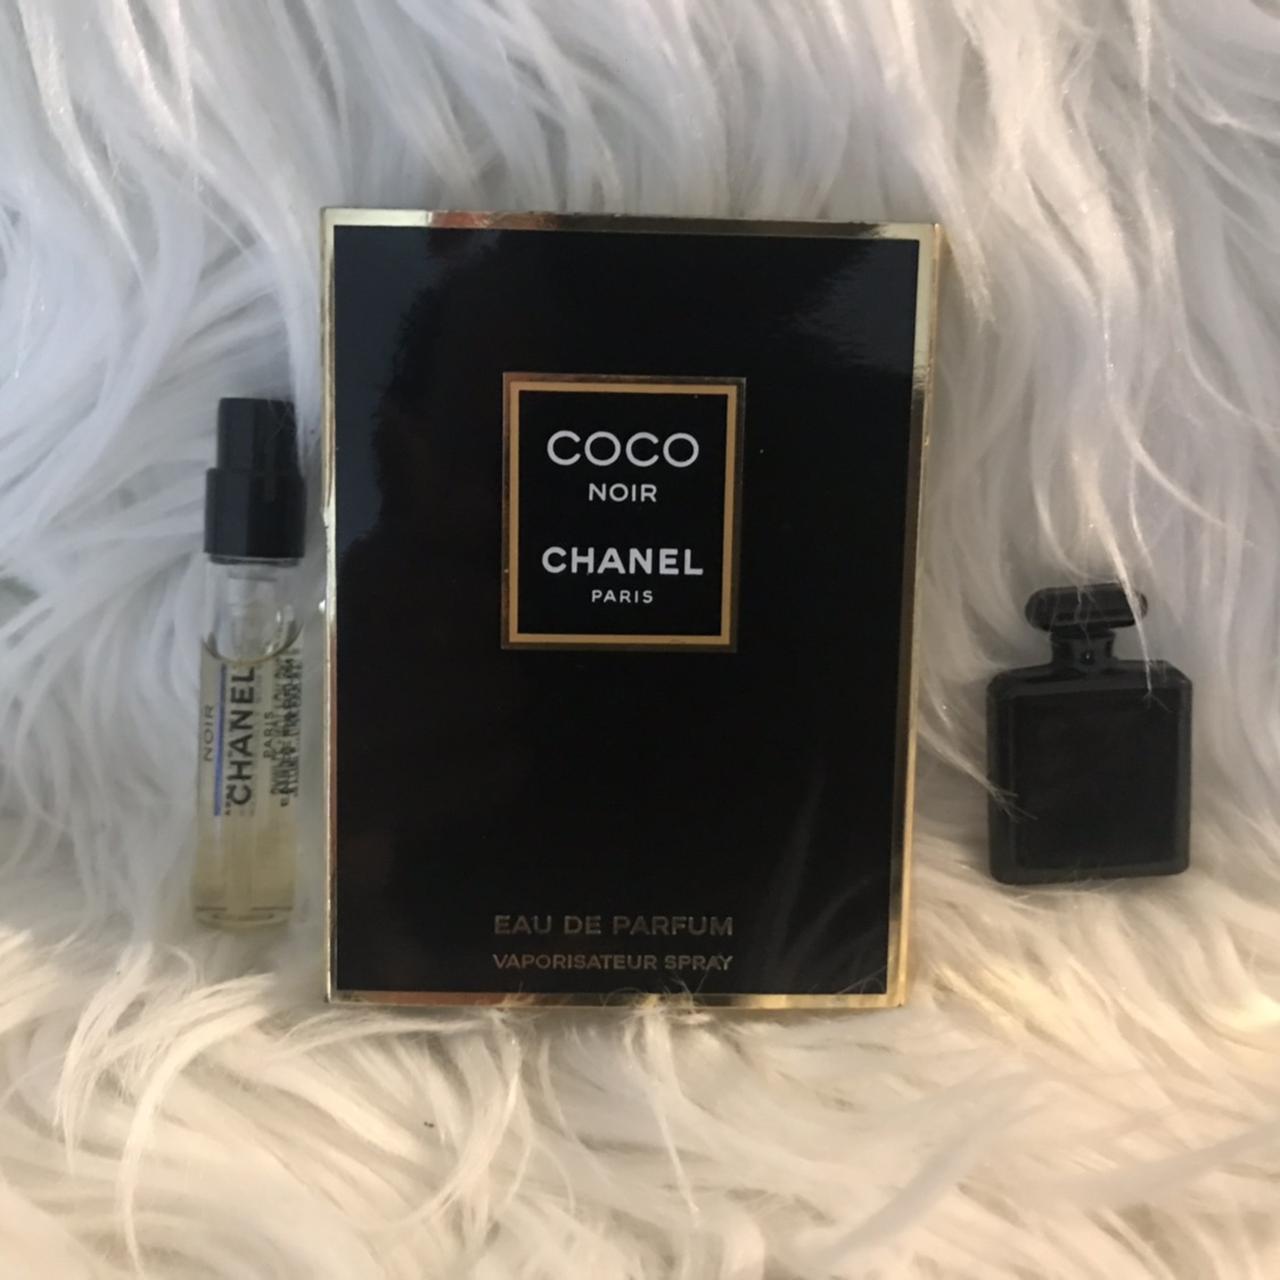 Chanel Coco Noir parfum sample 2ml & Fragrance Stone